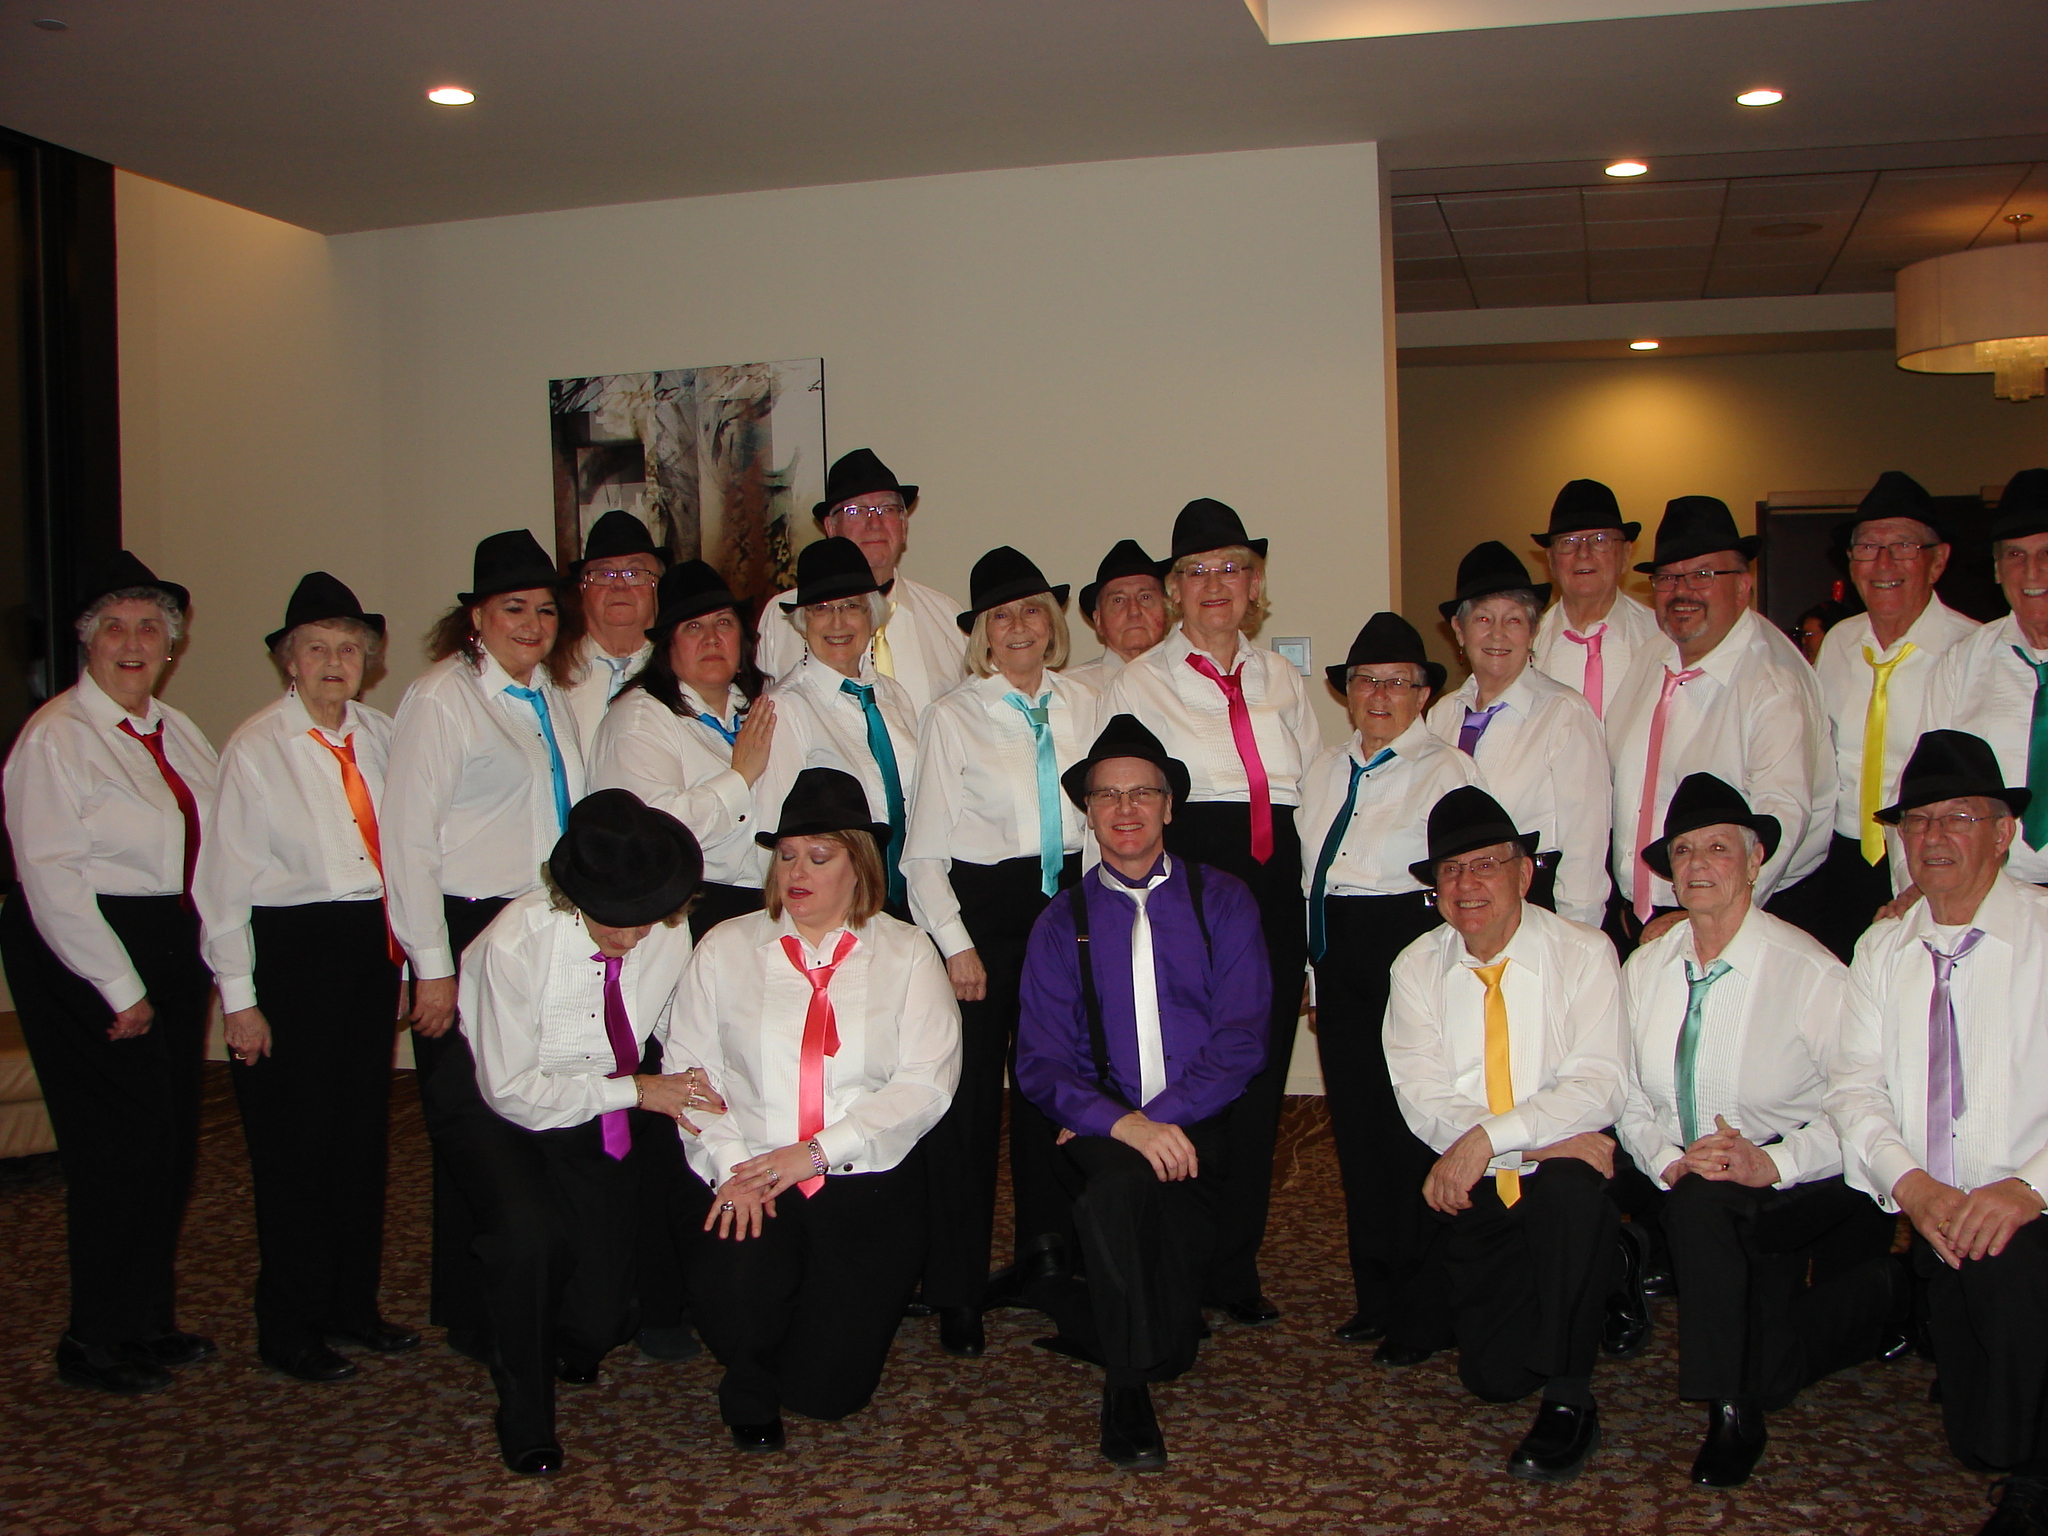 Chorus group photo